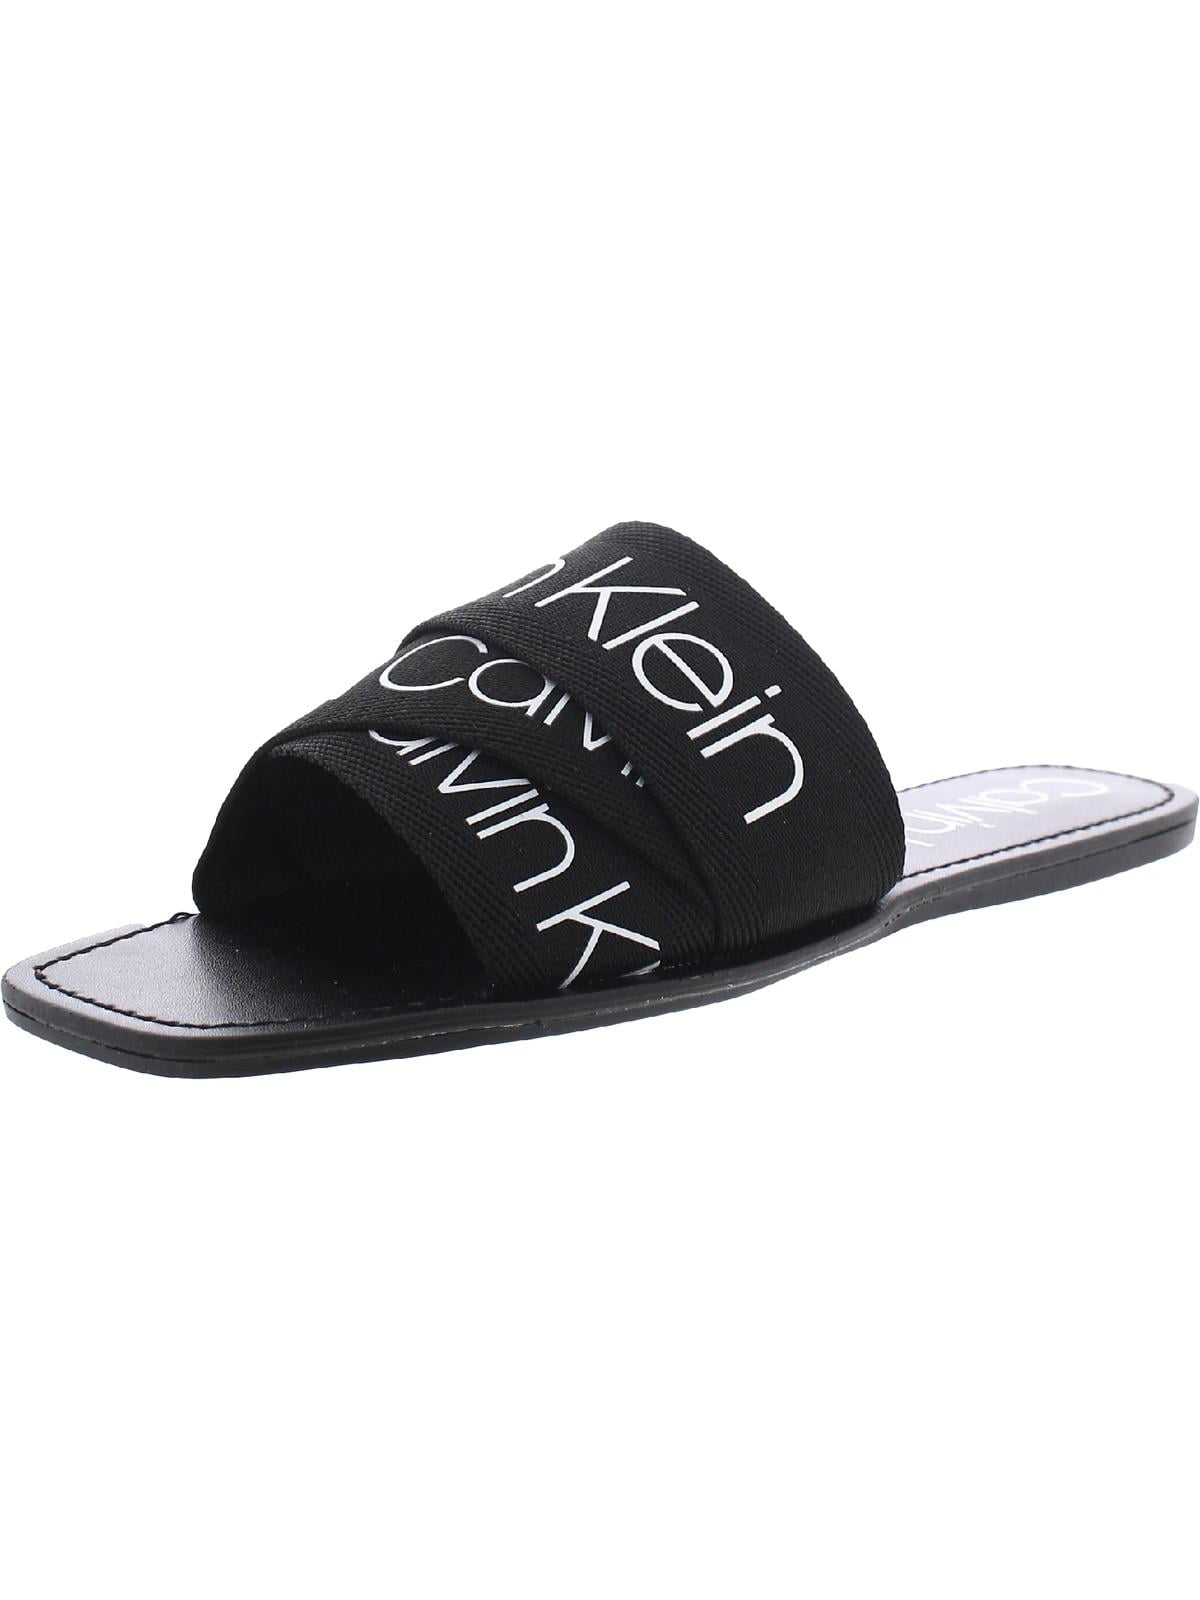 Calvin Klein Womens Bainy Canvas Slides Flat Sandals Black 10 Medium (B,M)  